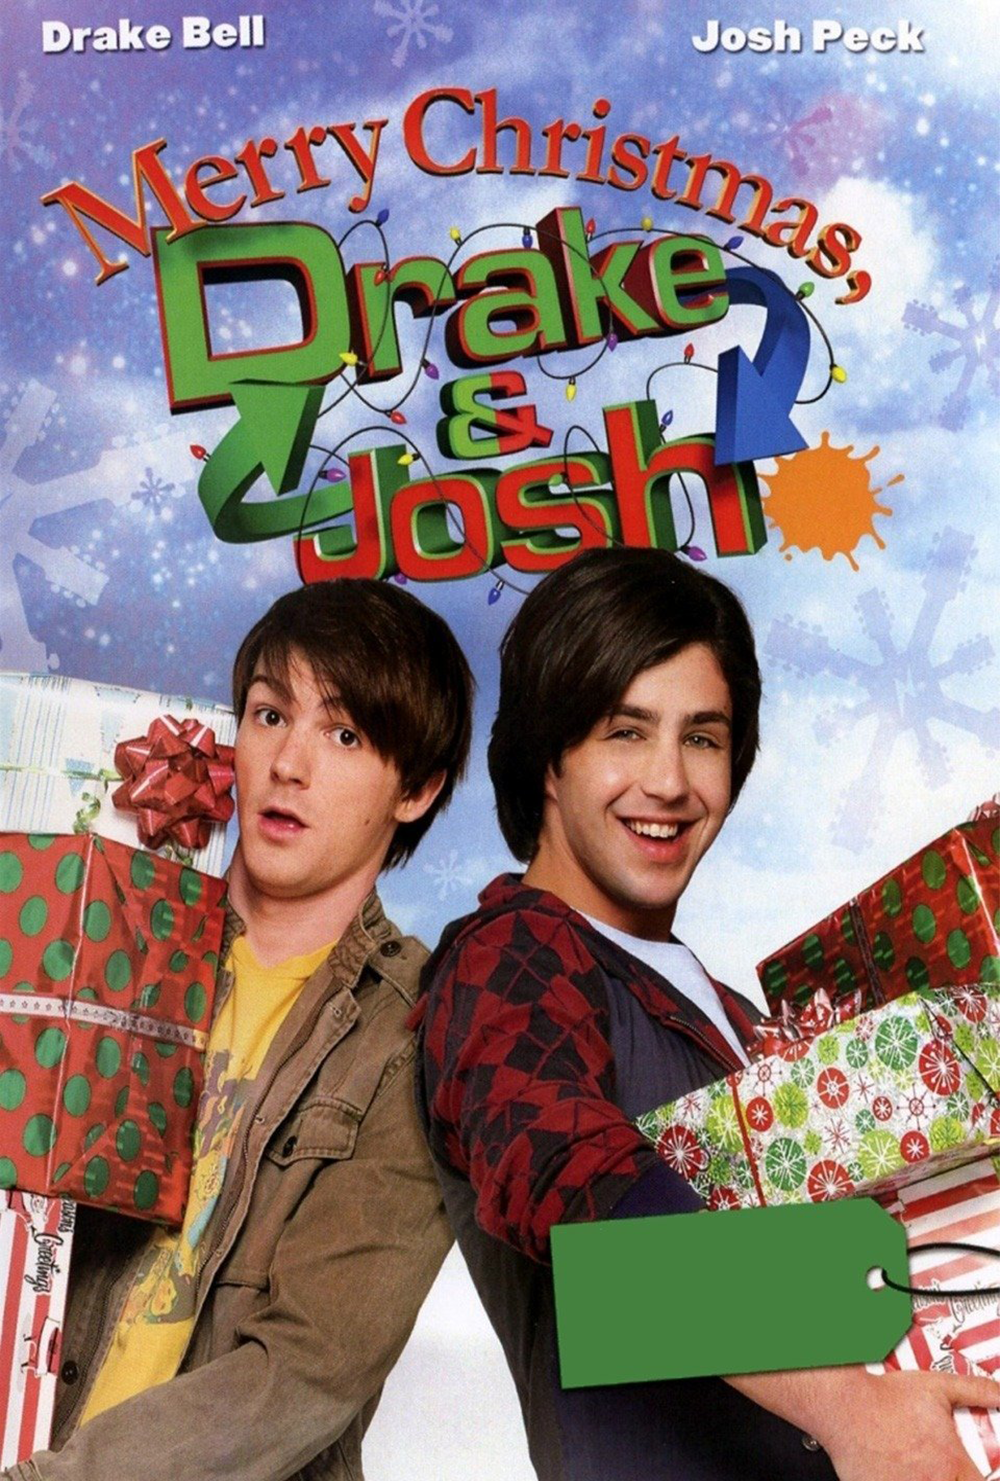 Merry Christmas Drake & Josh